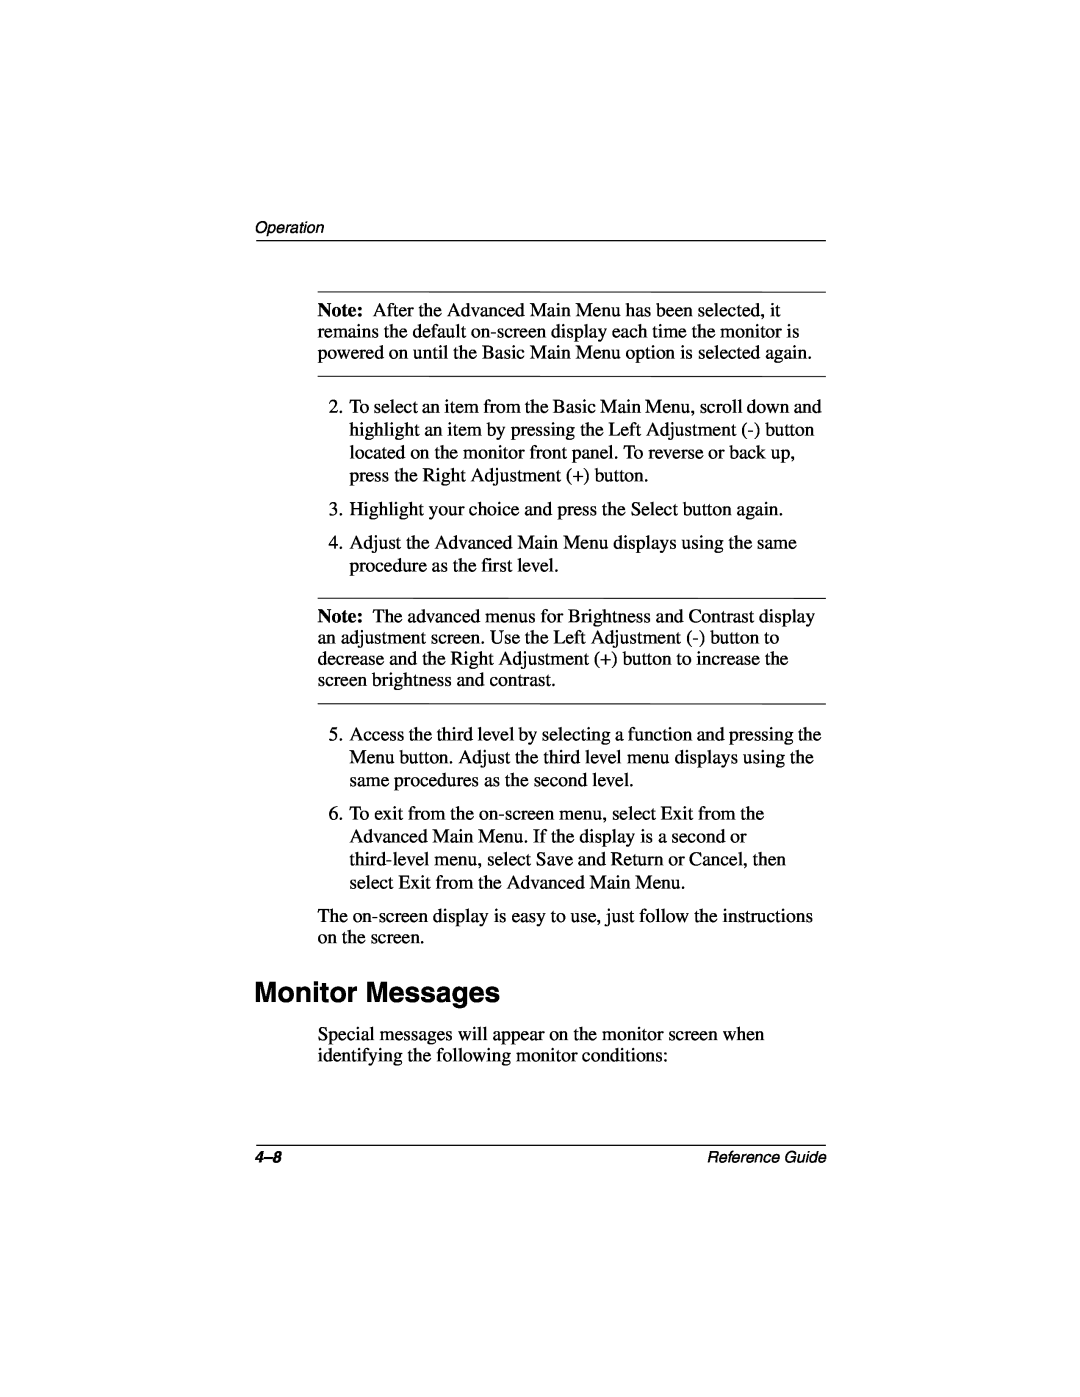 Compaq 5017 manual Monitor Messages 